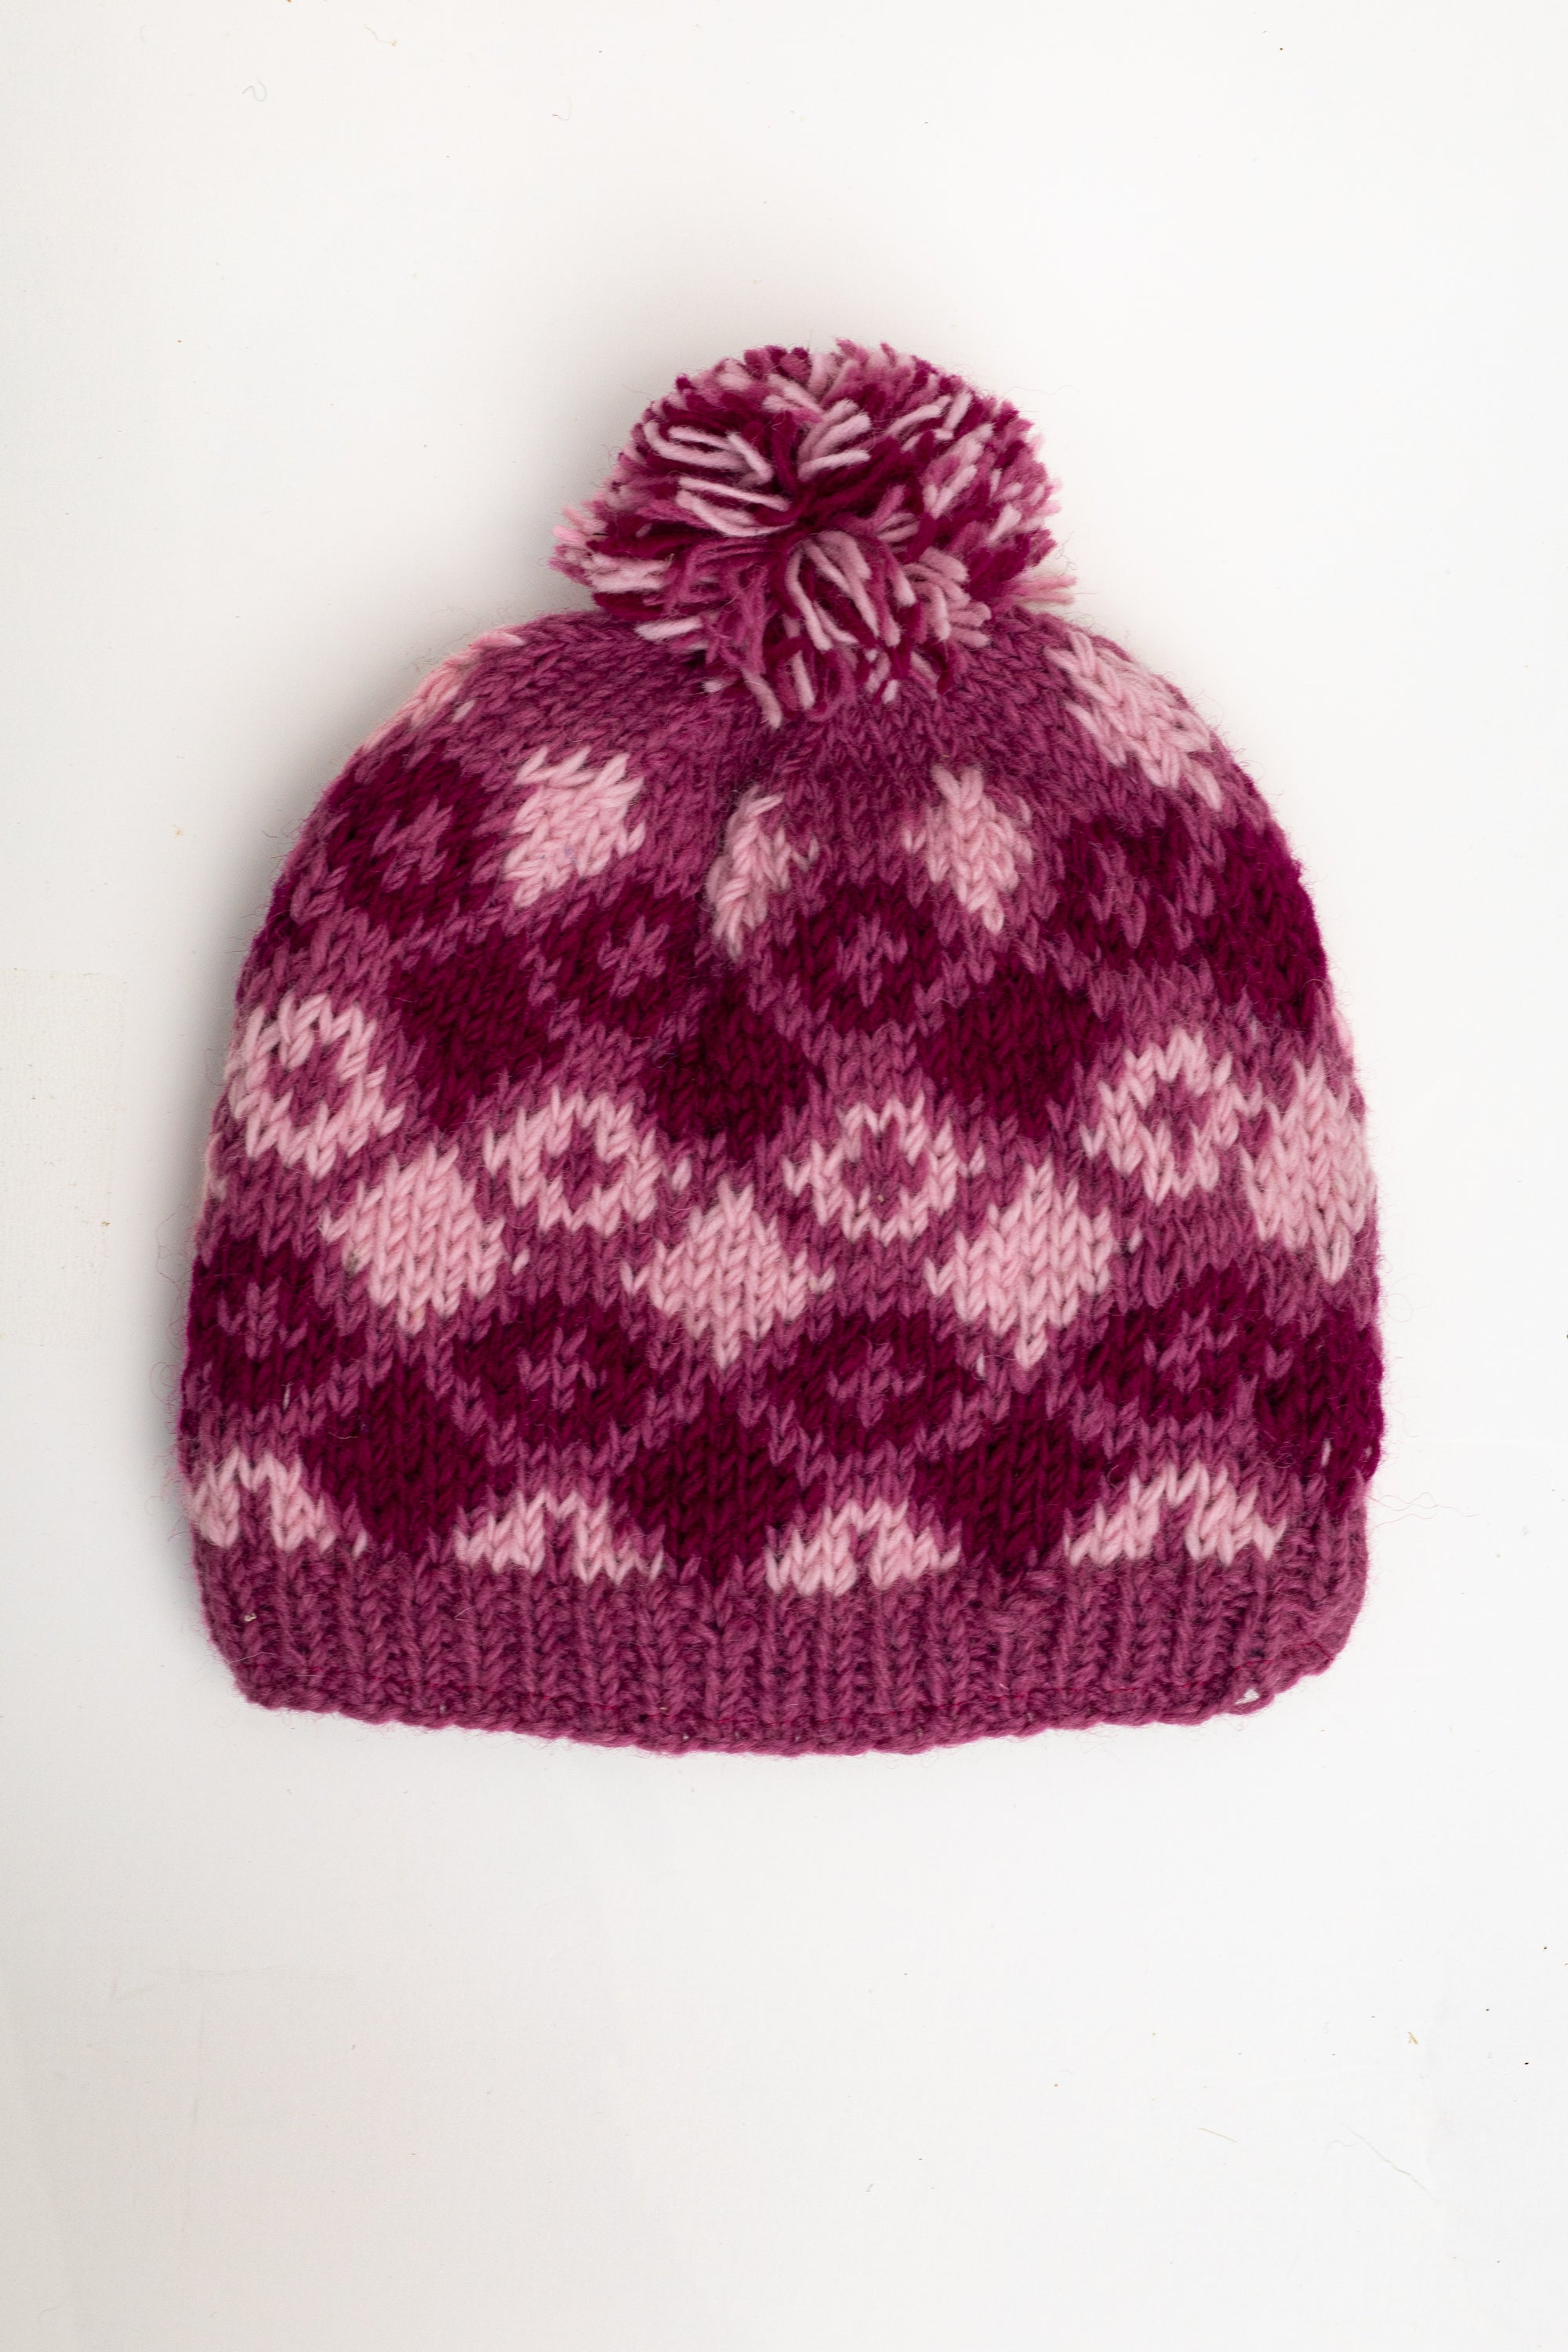 Wool & Fleece Hat with Pom - Diamond Design (Pink & Fuchsia) - Made in Nepal